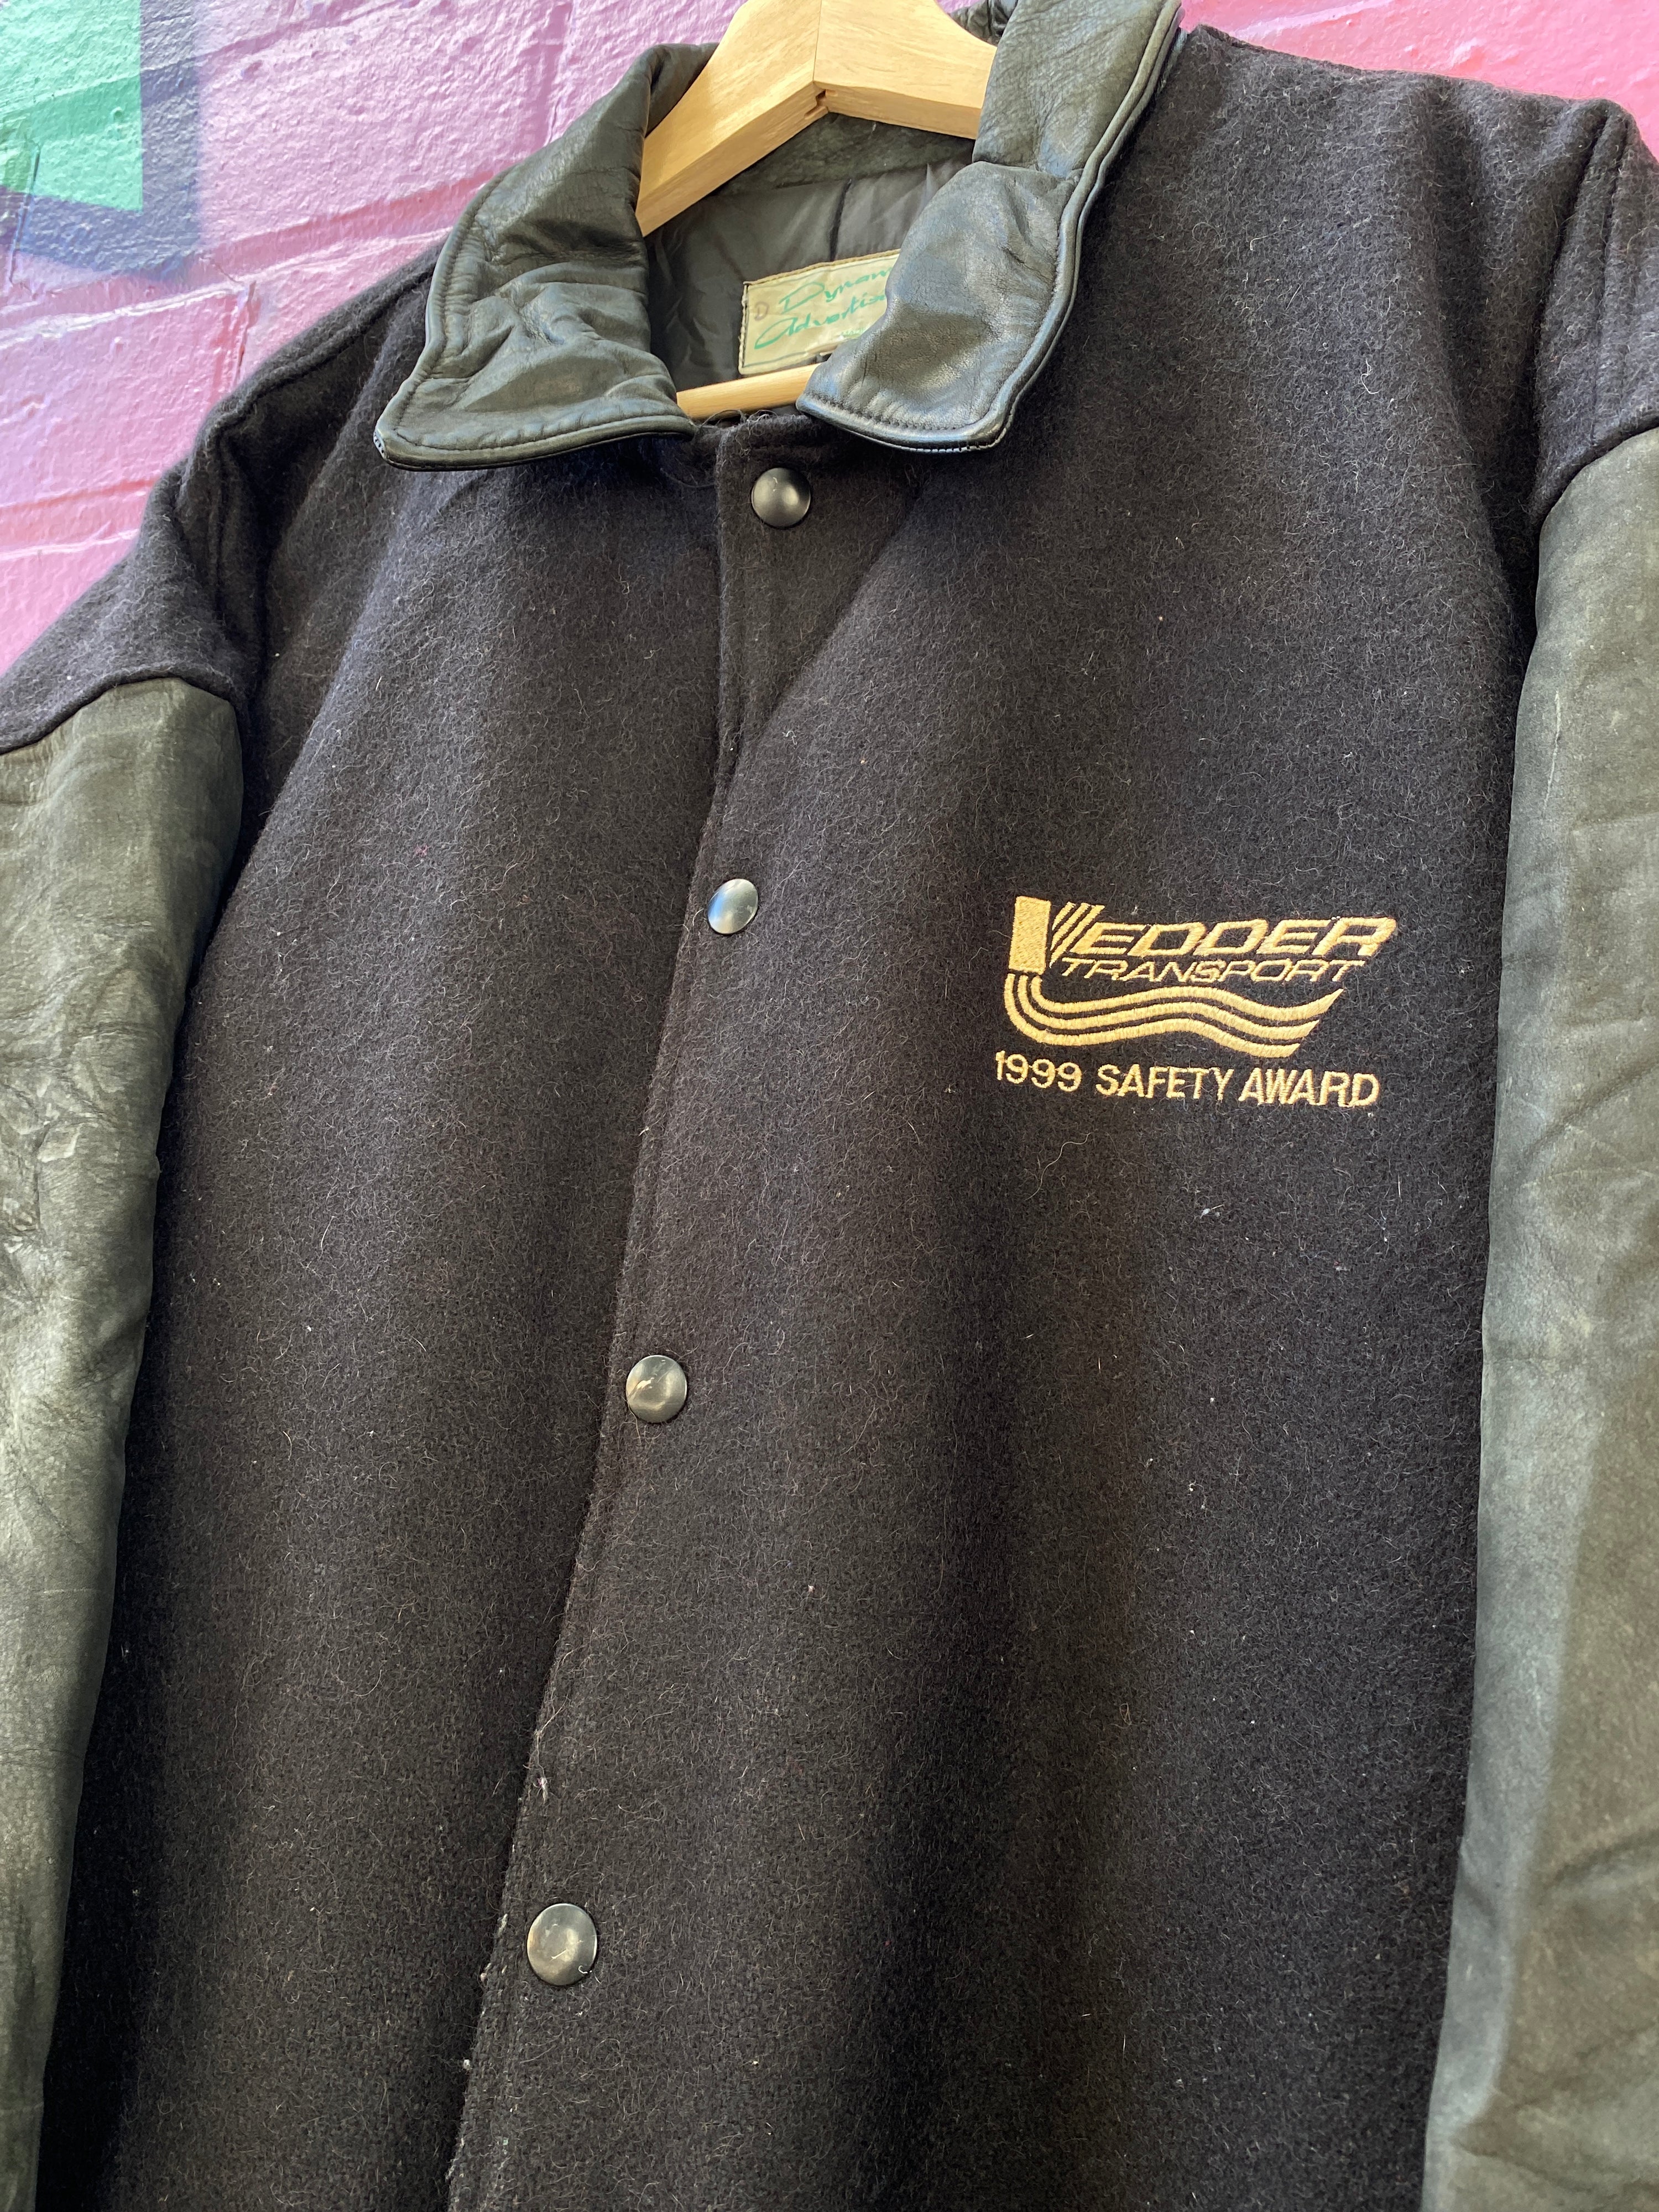 L - Vintage 'Edder Tansport' 1999 Safety Award Varsity Jacket